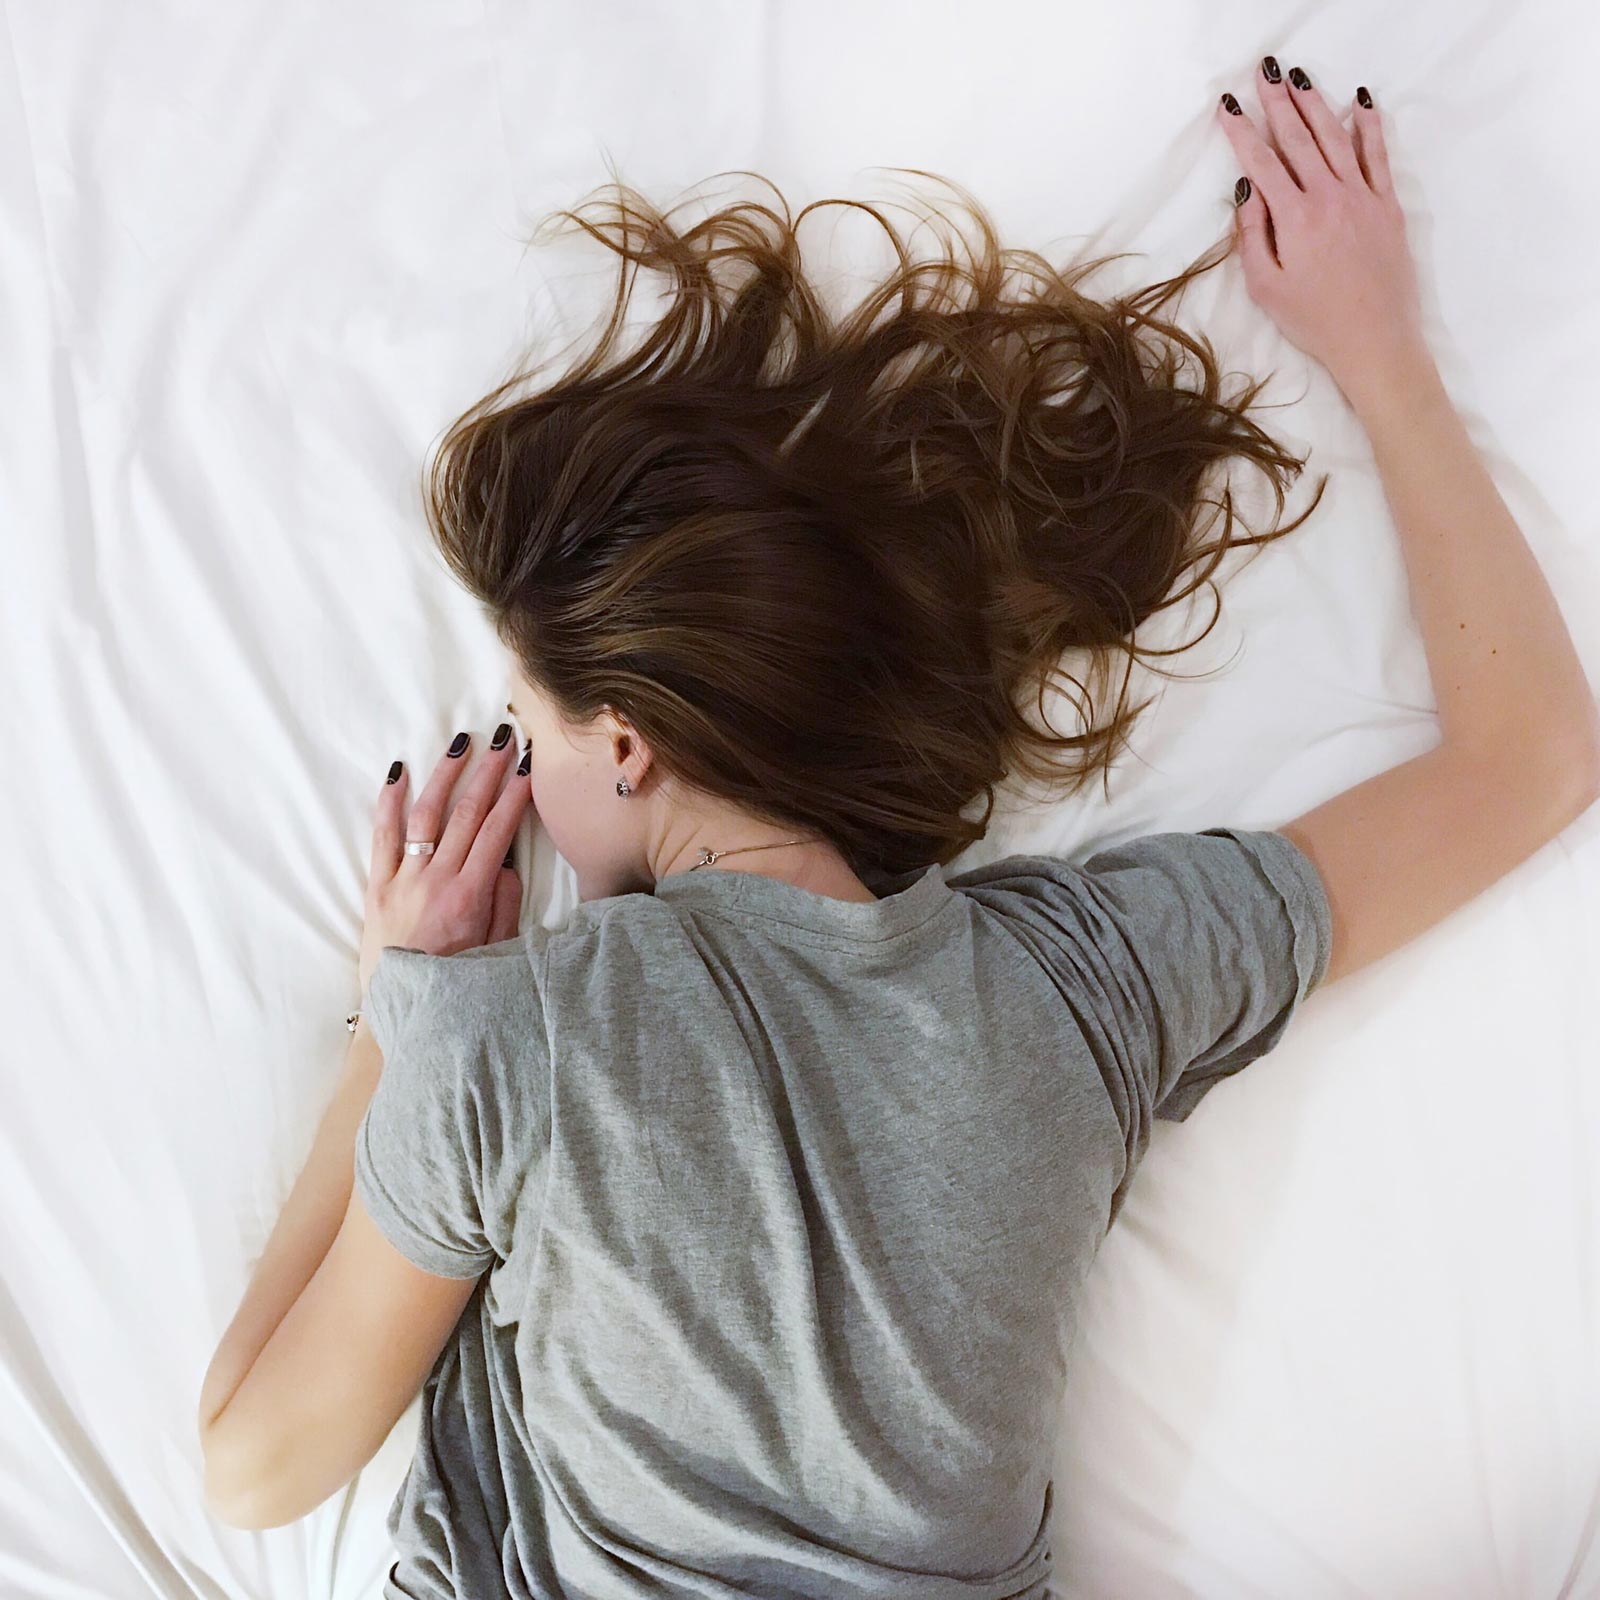 Losing Sleep Over Sleep Trackers